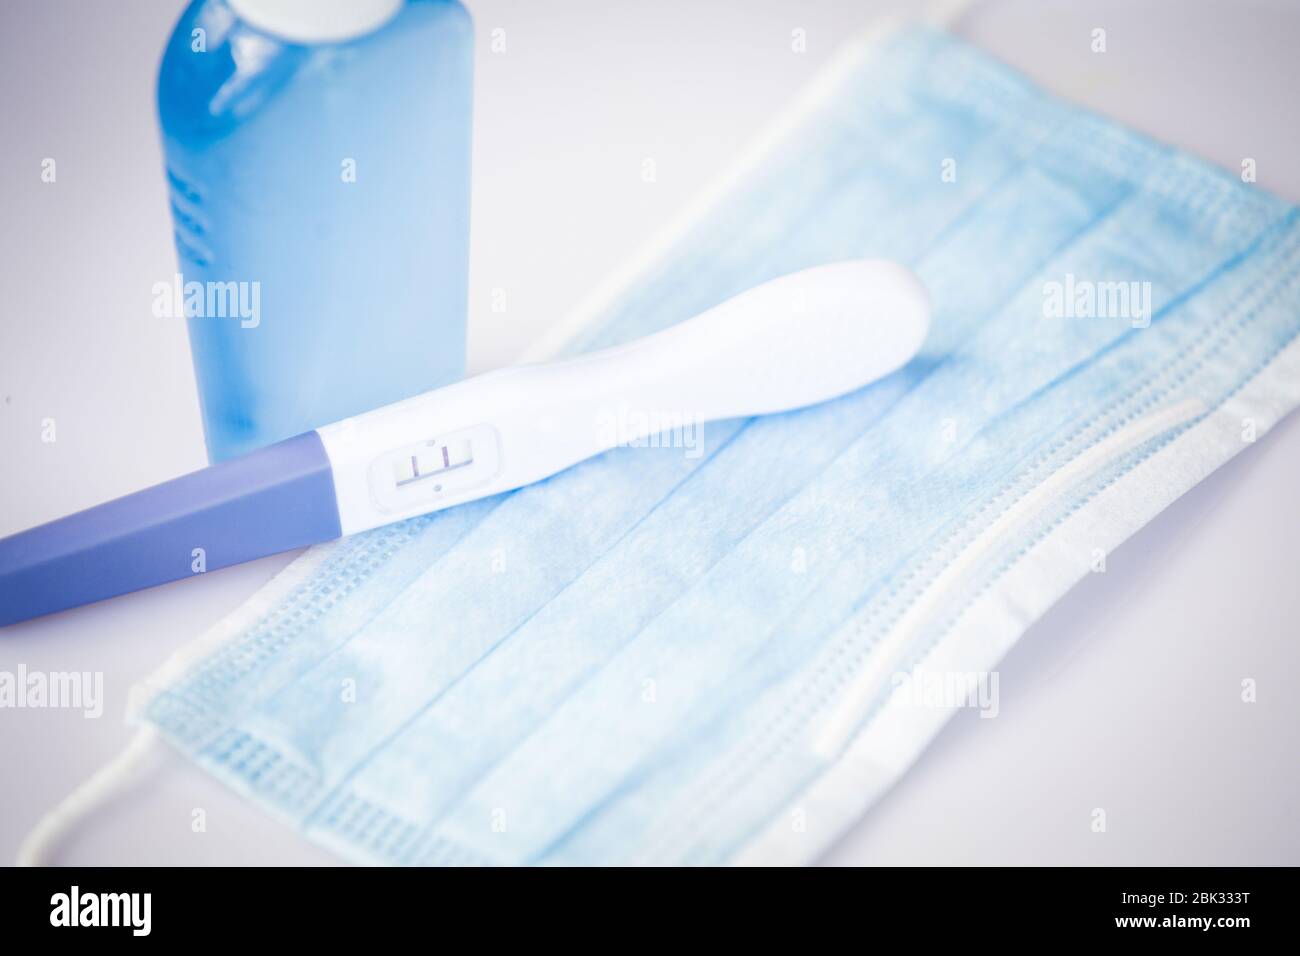 Positive pregnancy test during coronavirus pandemic Stock Photo